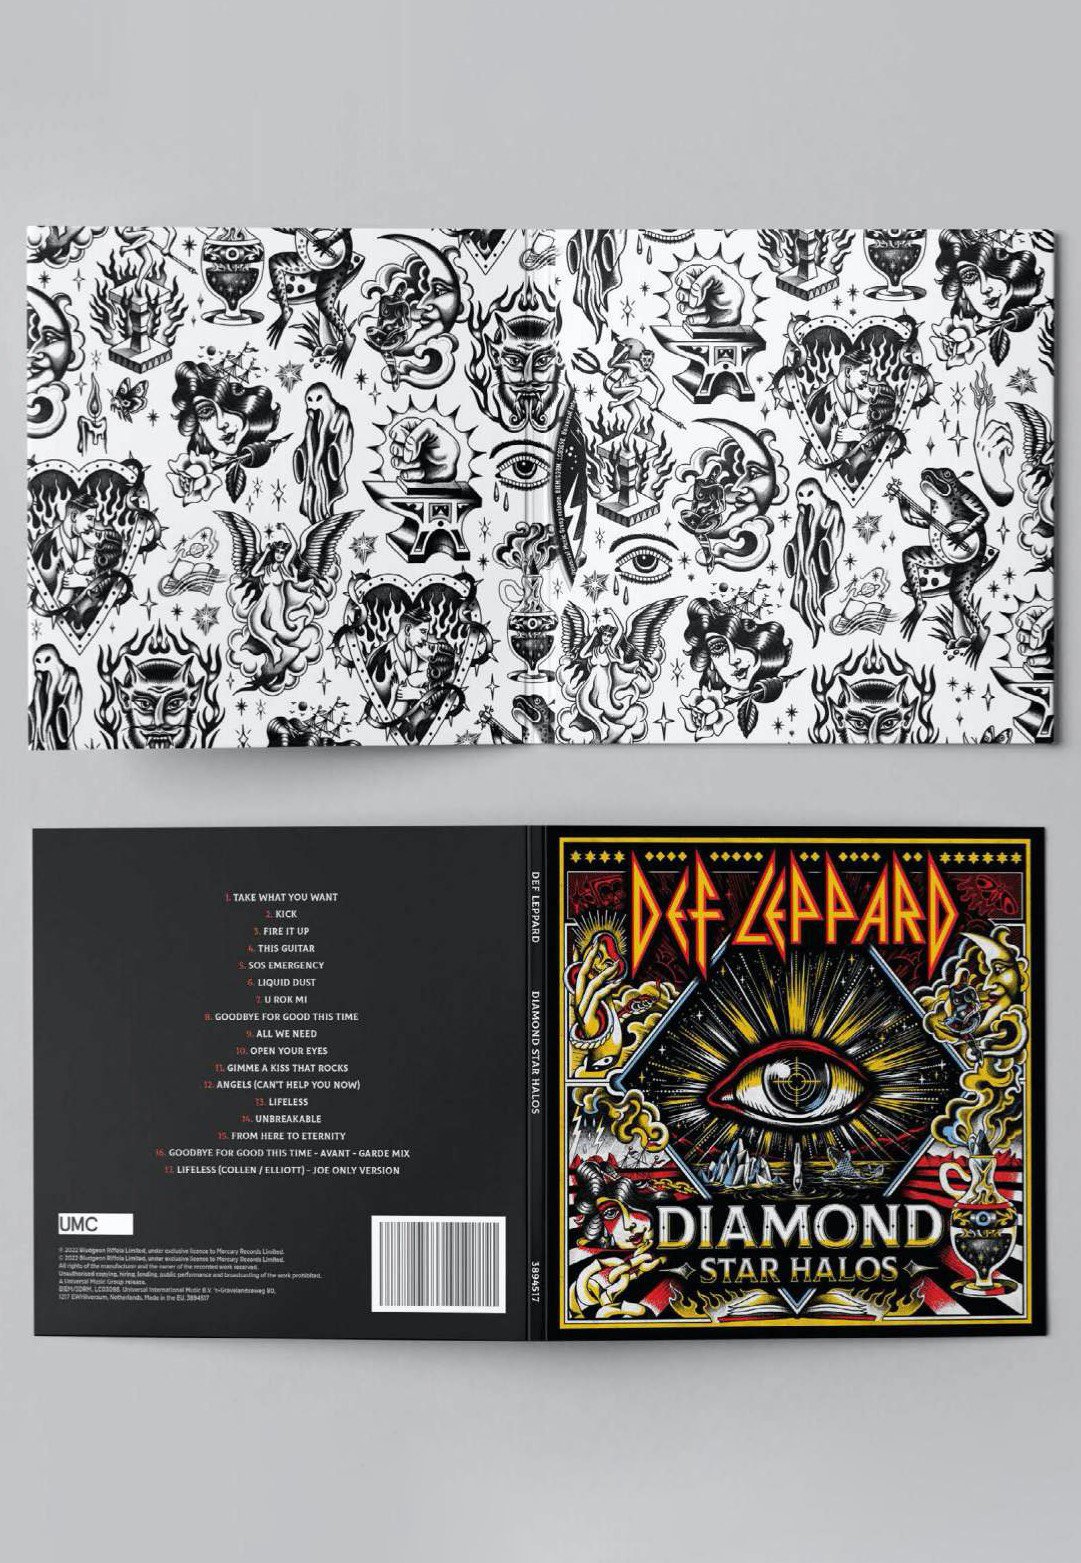 Def Leppard - Diamond Star Halos Ltd. Deluxe - Digipak CD